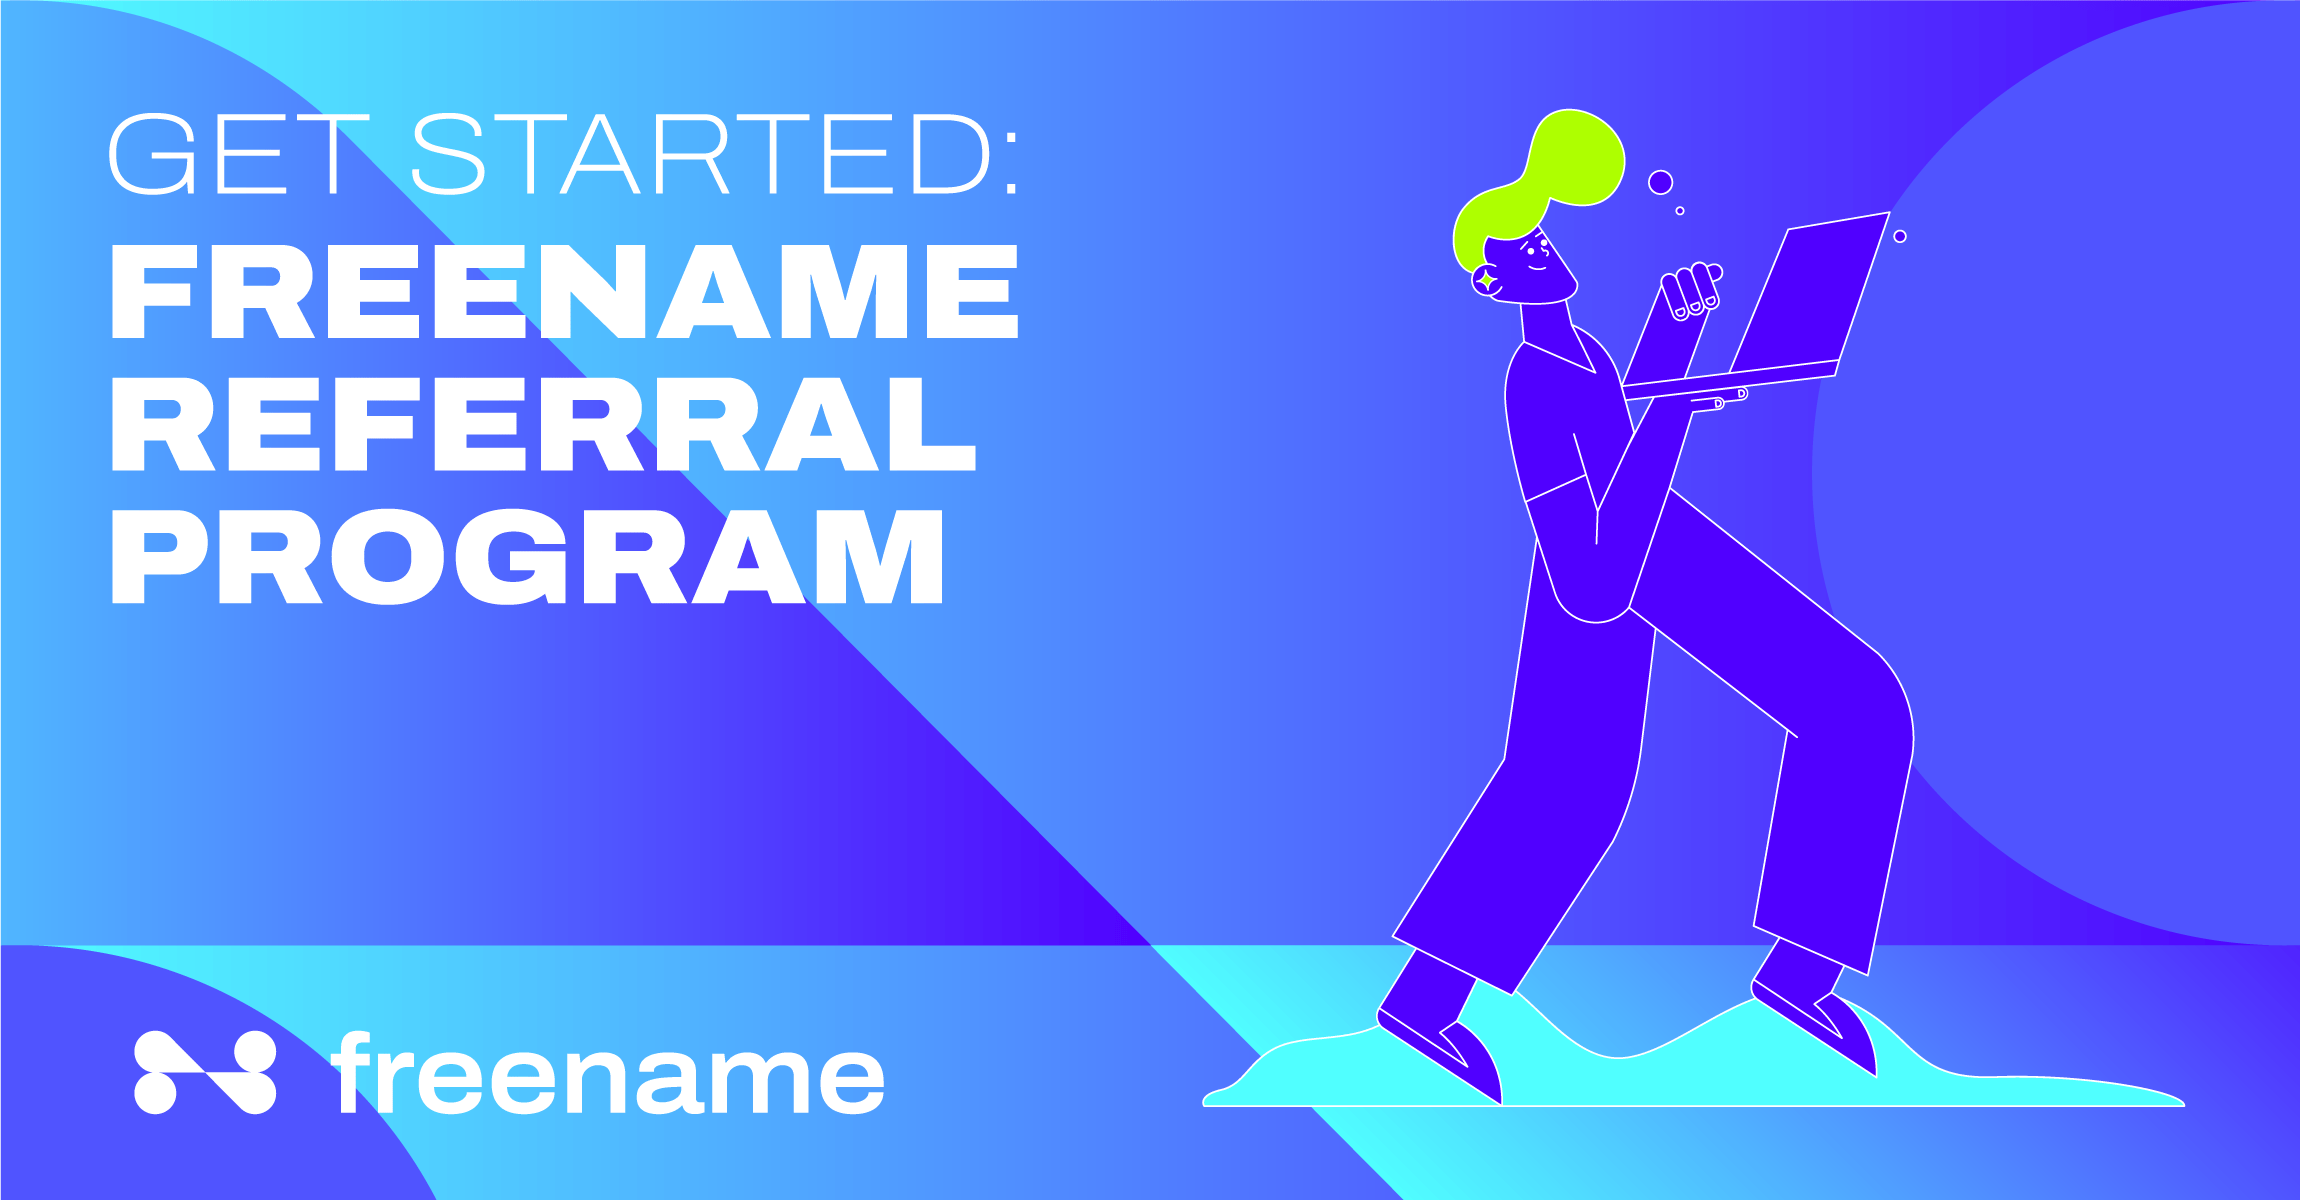 Get Started: Freename Referral Program